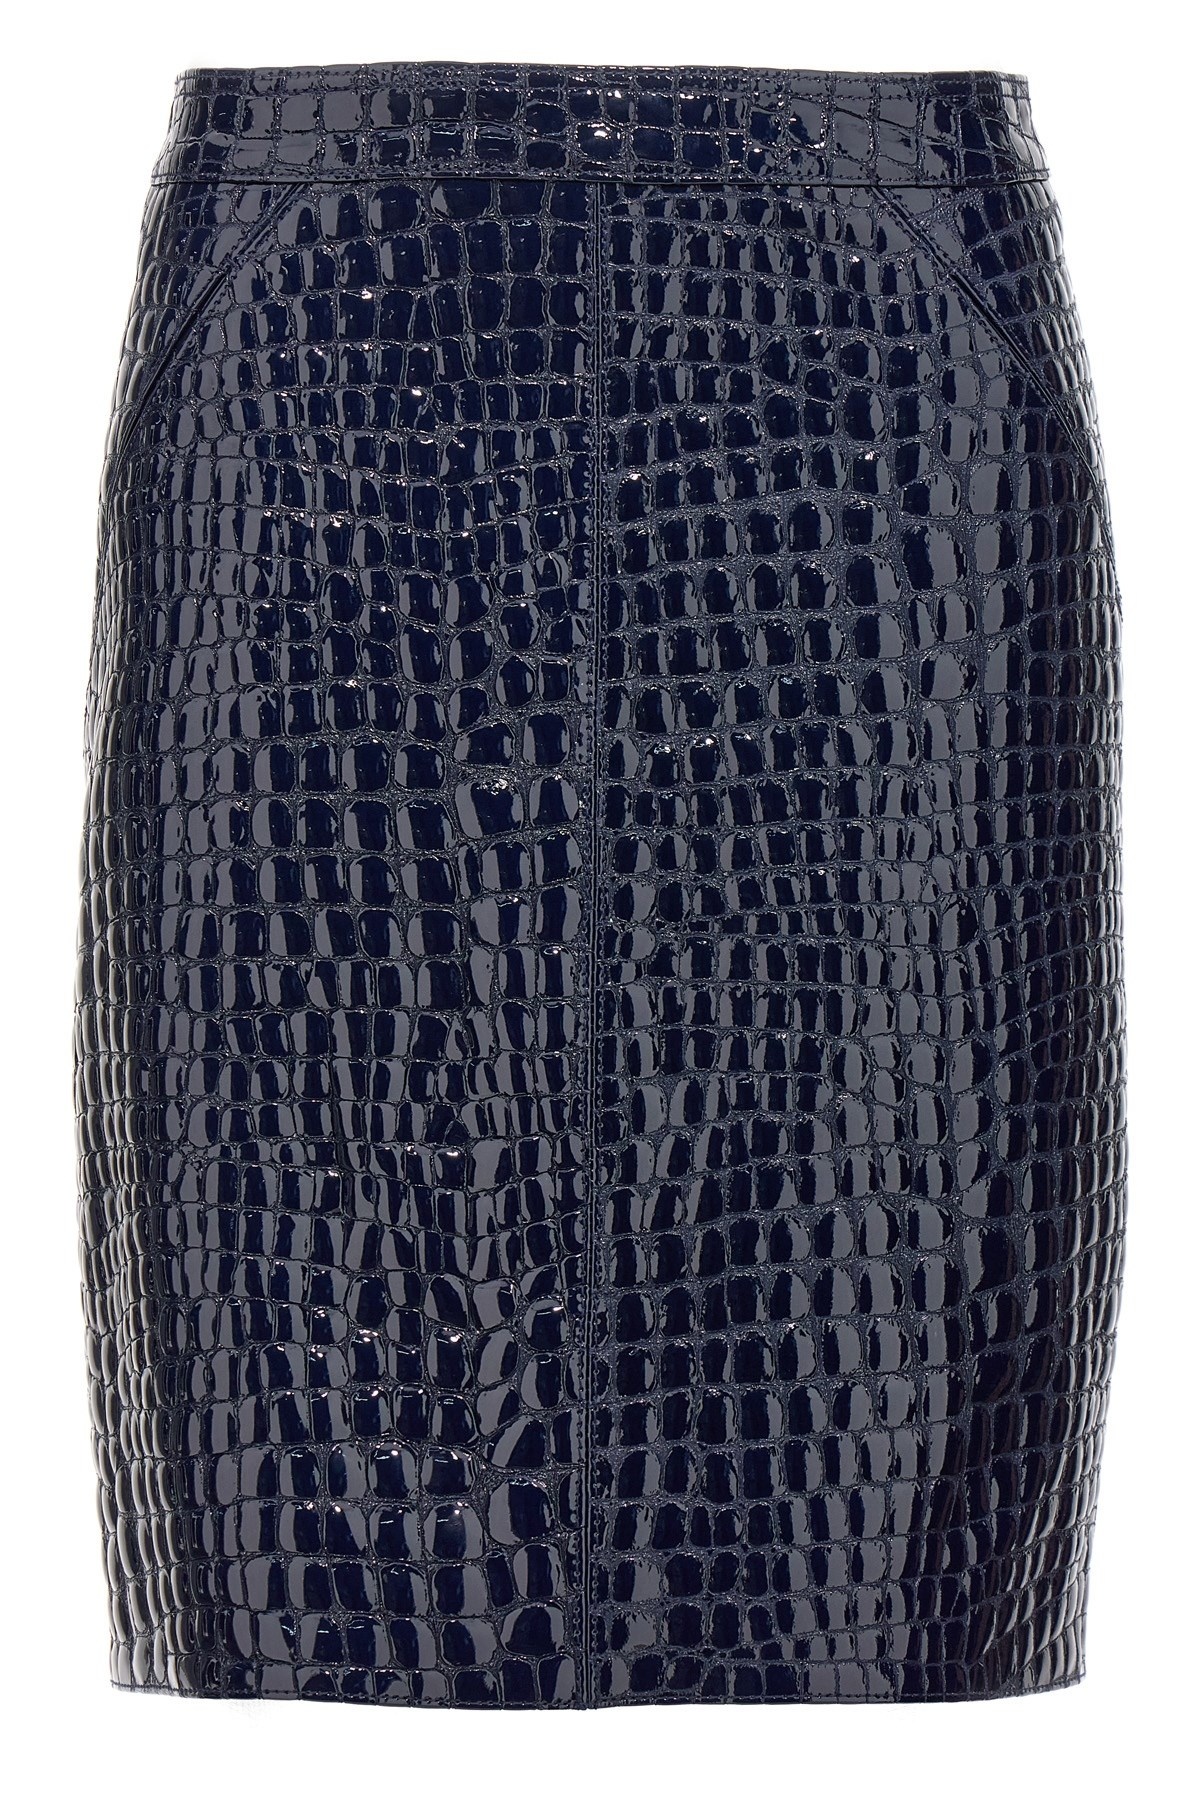 Croc print skirt - 1